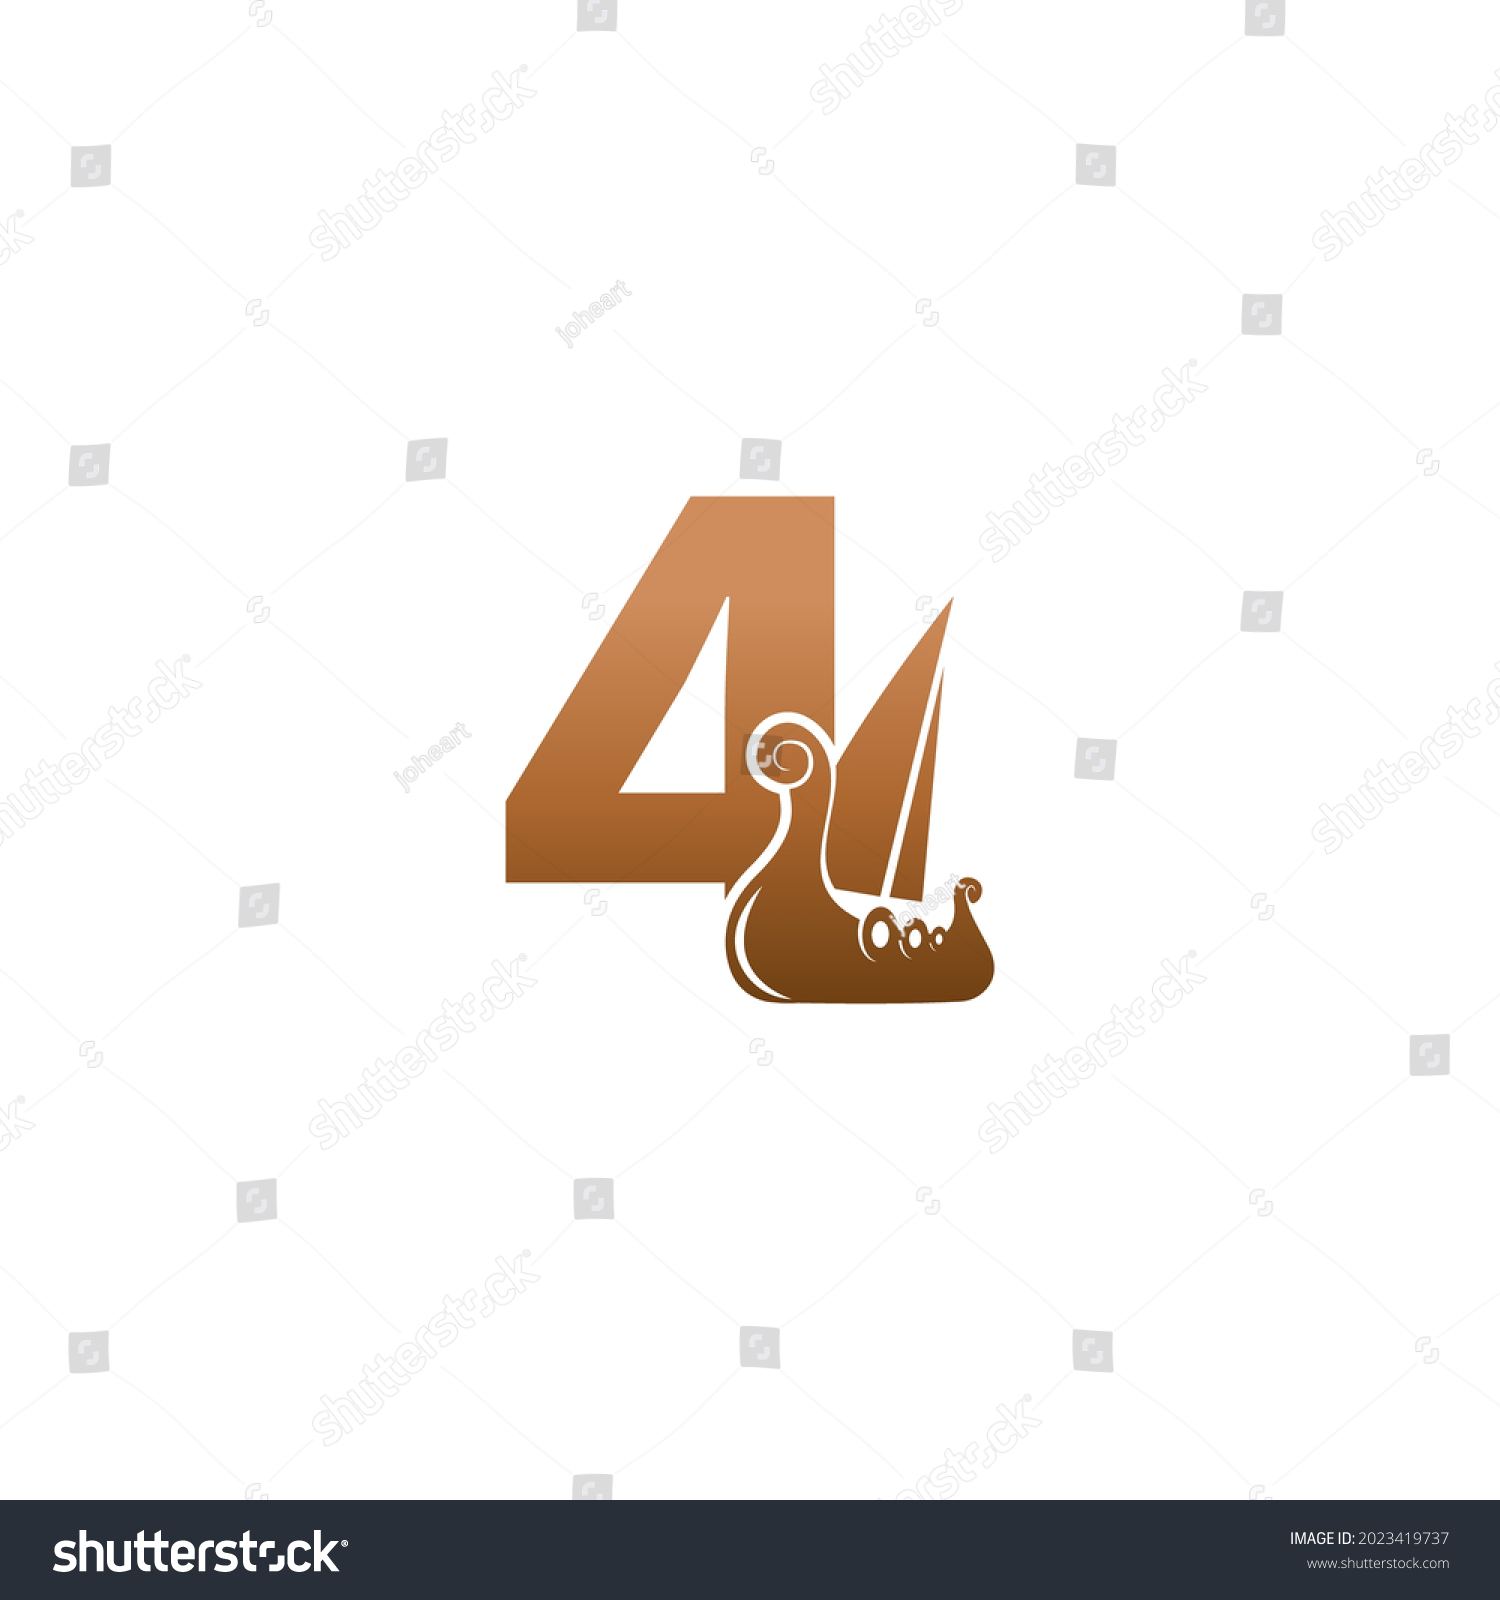 SVG of Number 4 with logo icon viking sailboat design template illustration svg